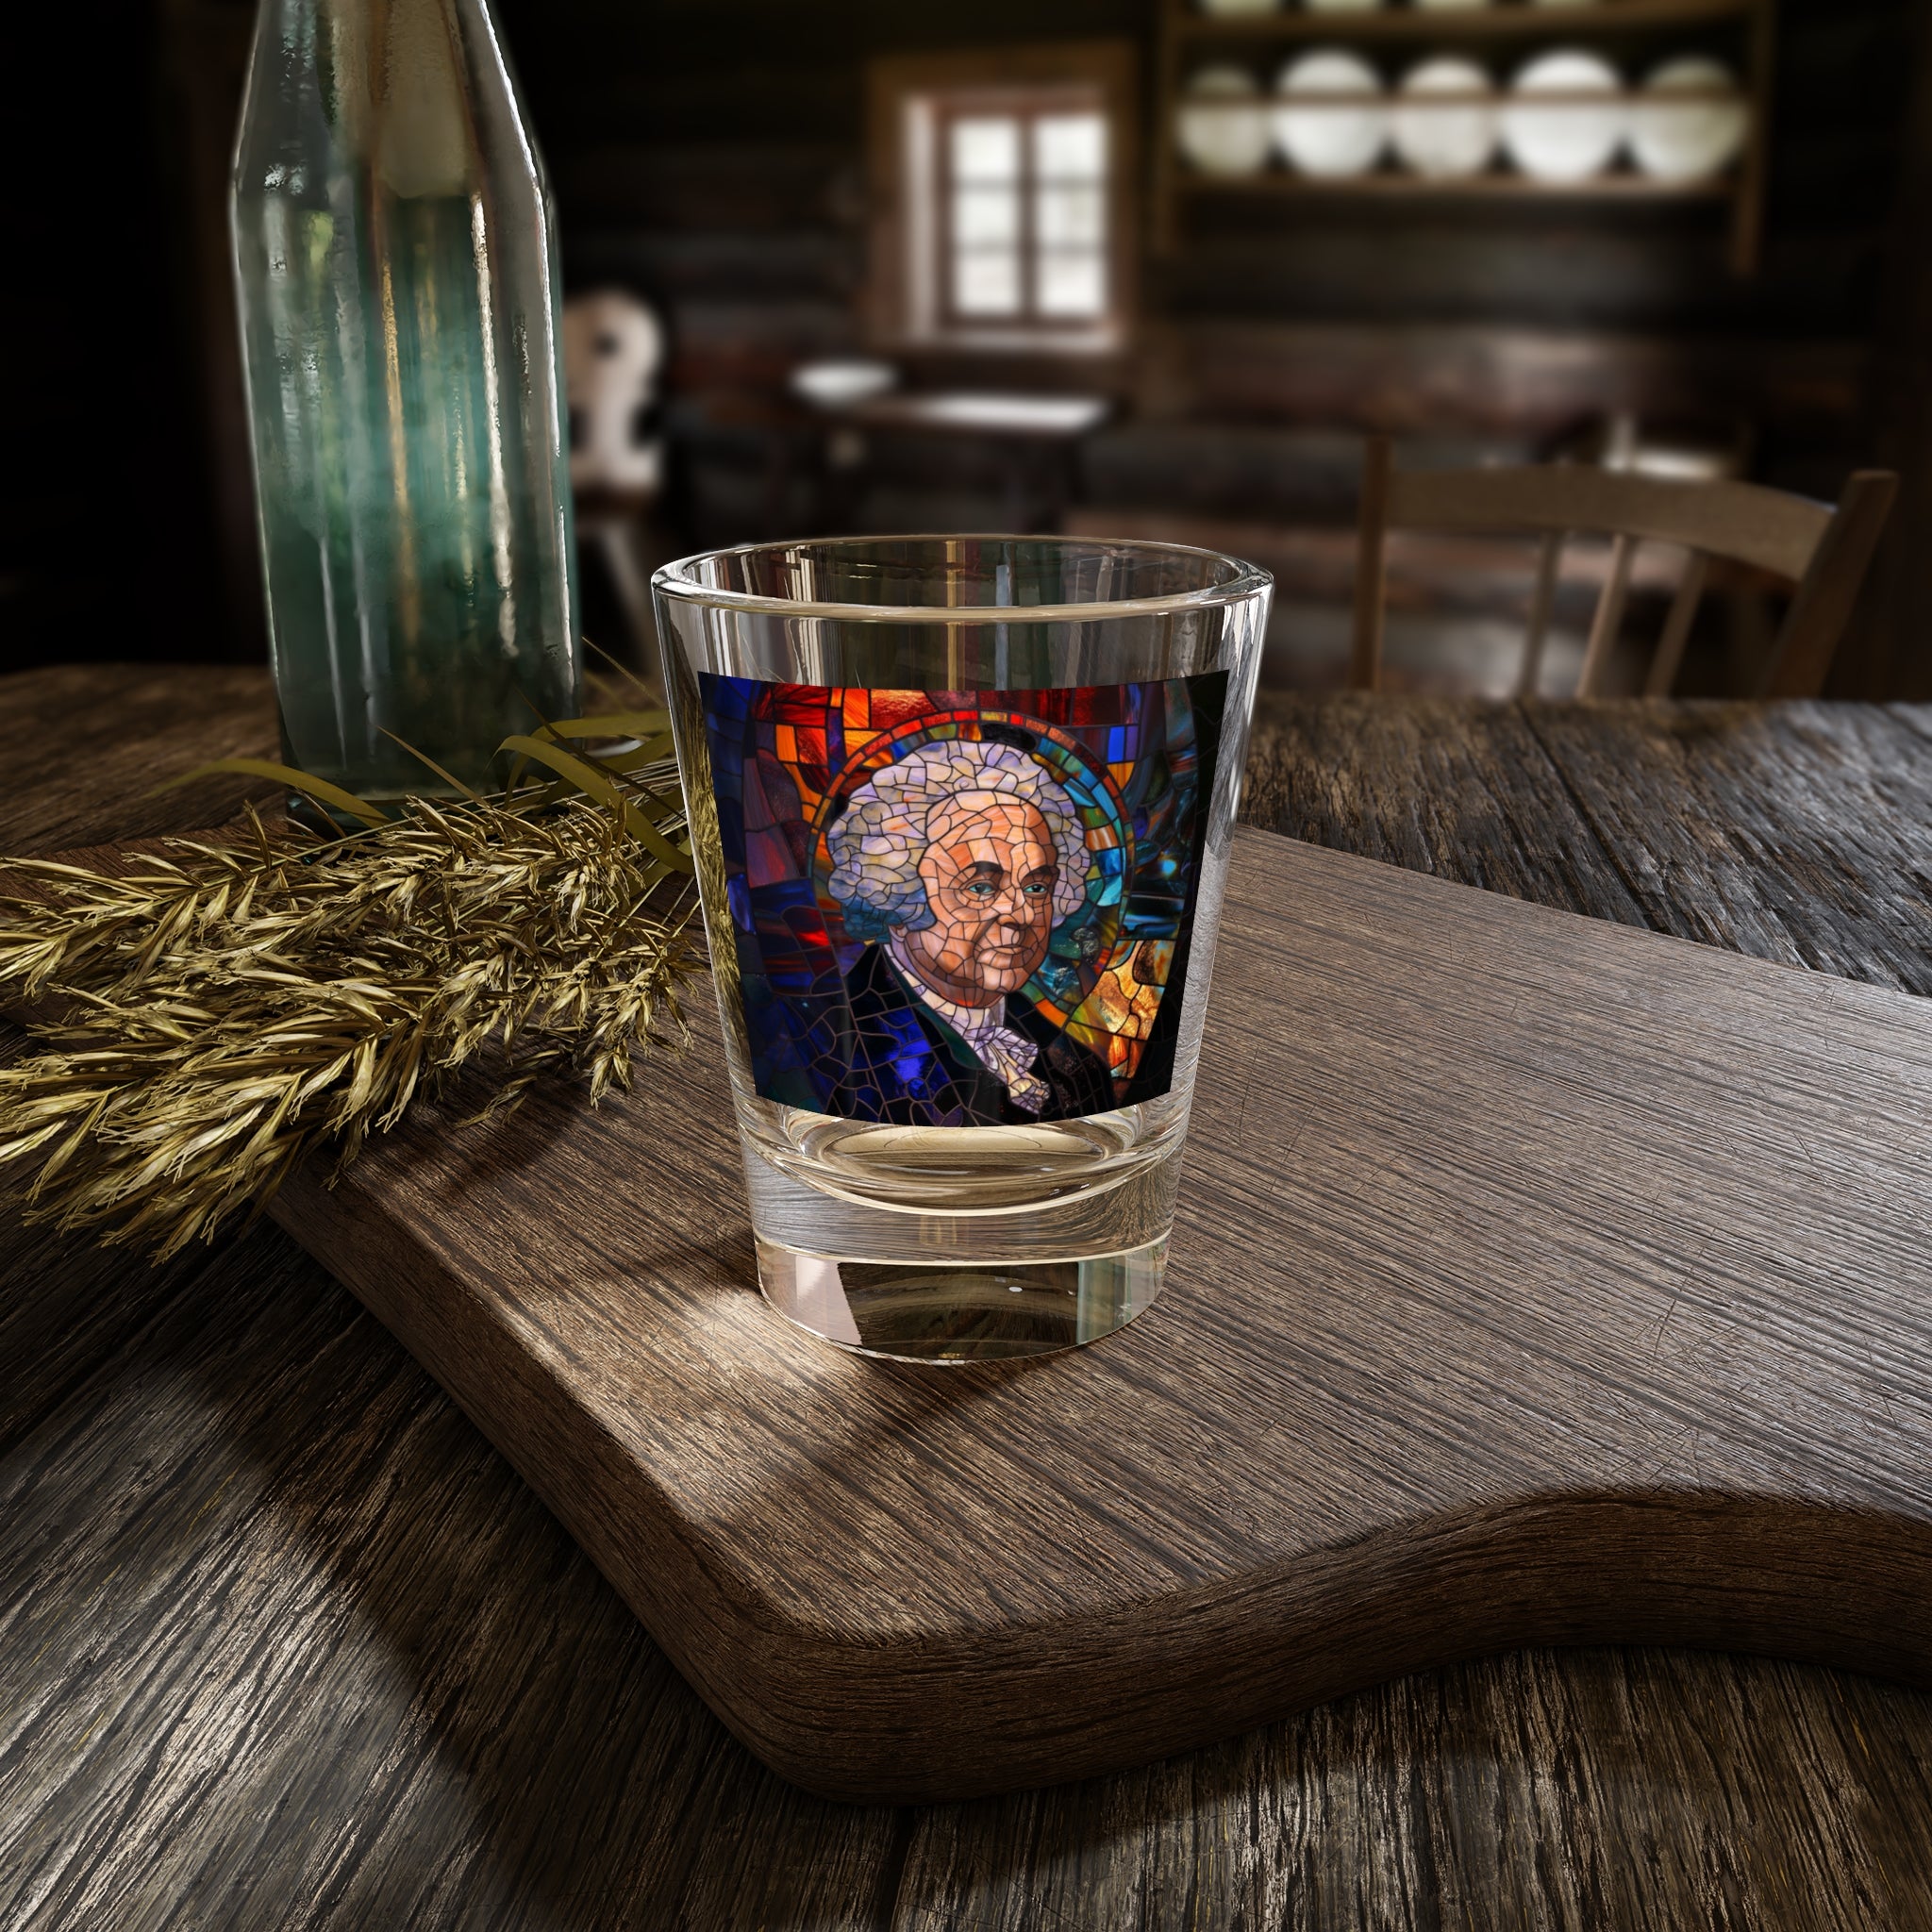 John Adams Stained Glass Shot Glass, 1.5oz